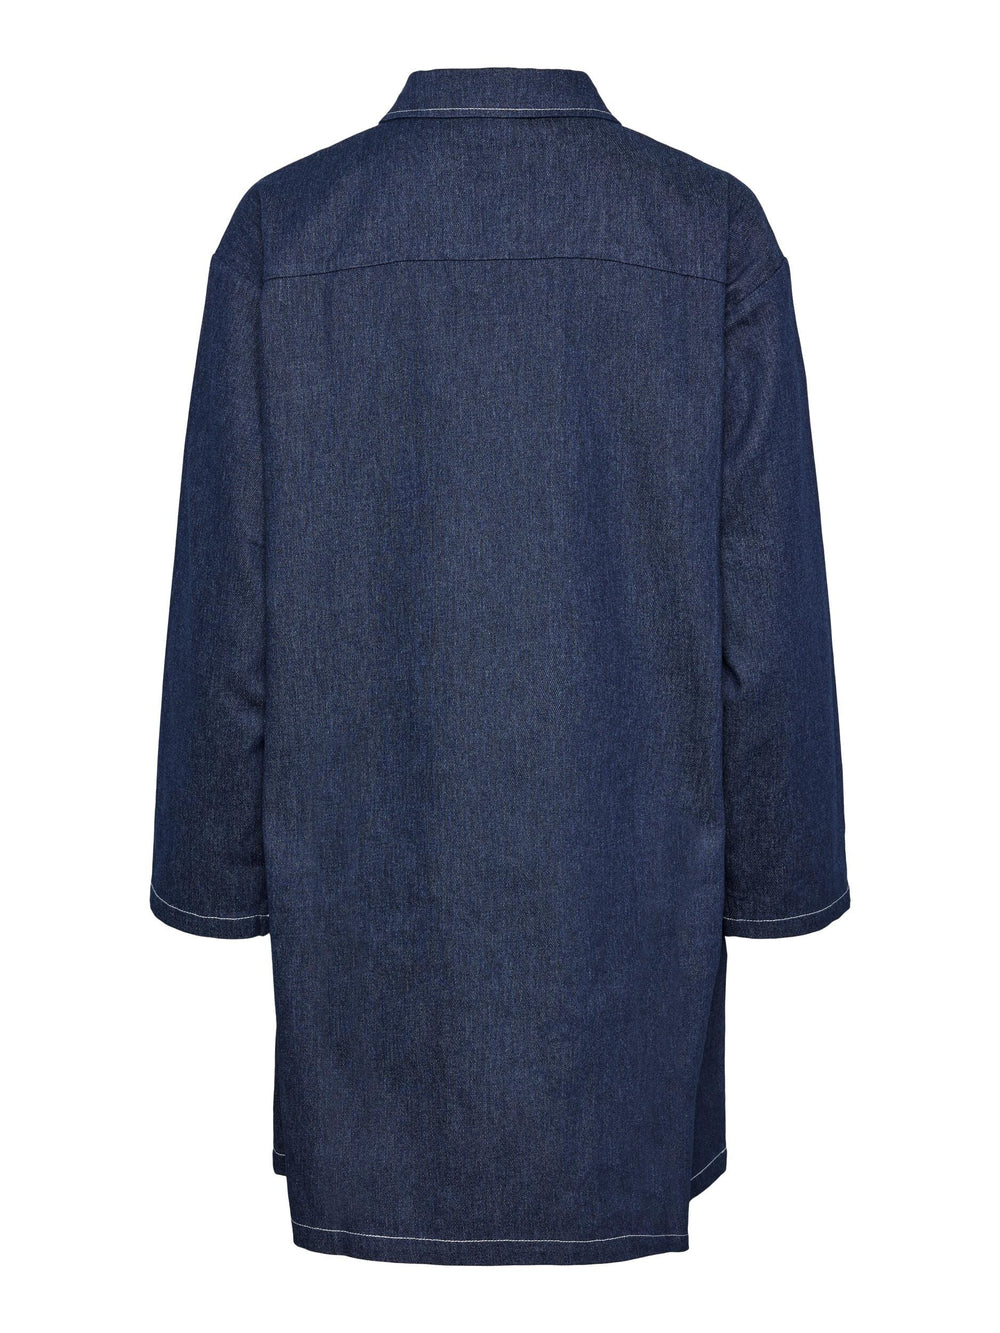 Pieces - Pcshirley Ls Short Denim Dress - 4523434 Dark Blue Denim White Contrast Stiching Kjoler 